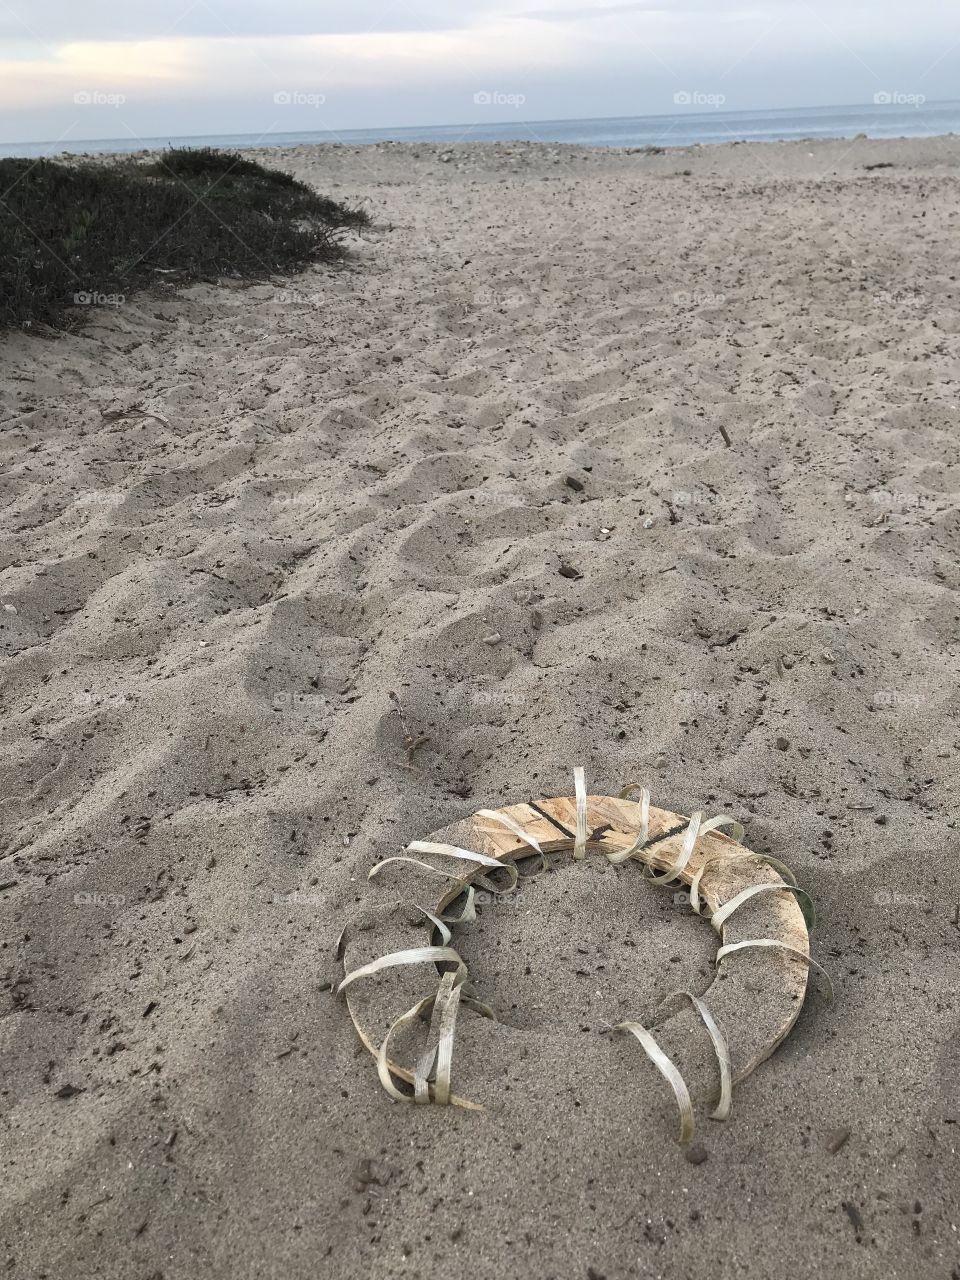 Beach debris